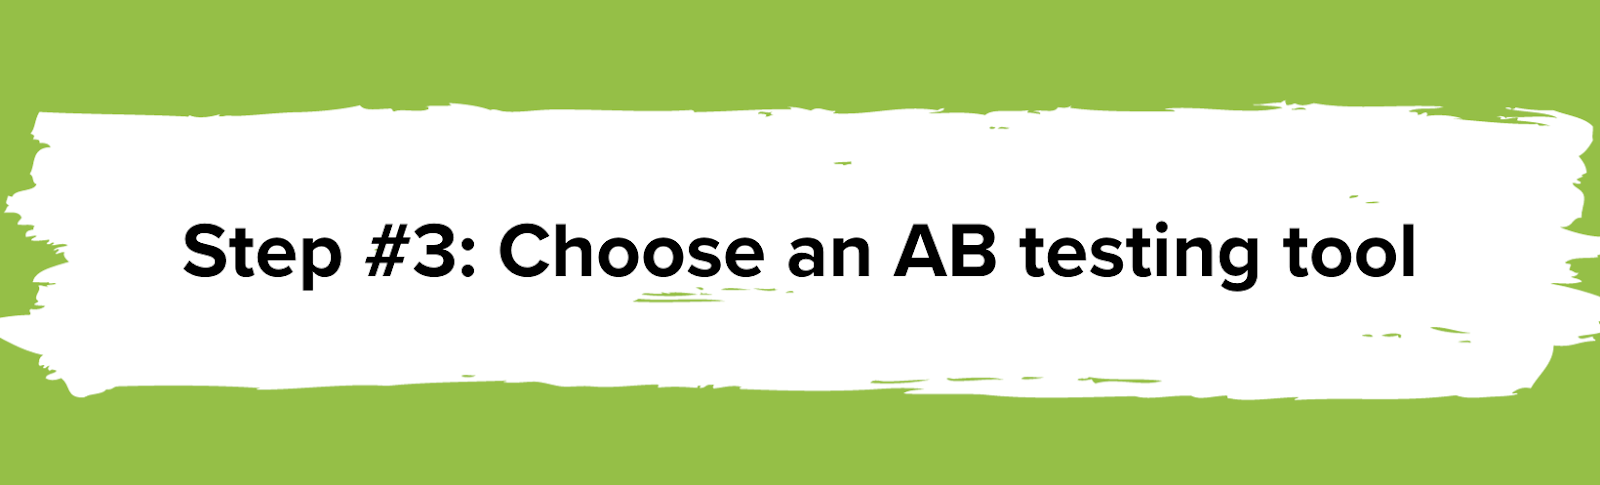 Step #3: Choose an AB testing tool